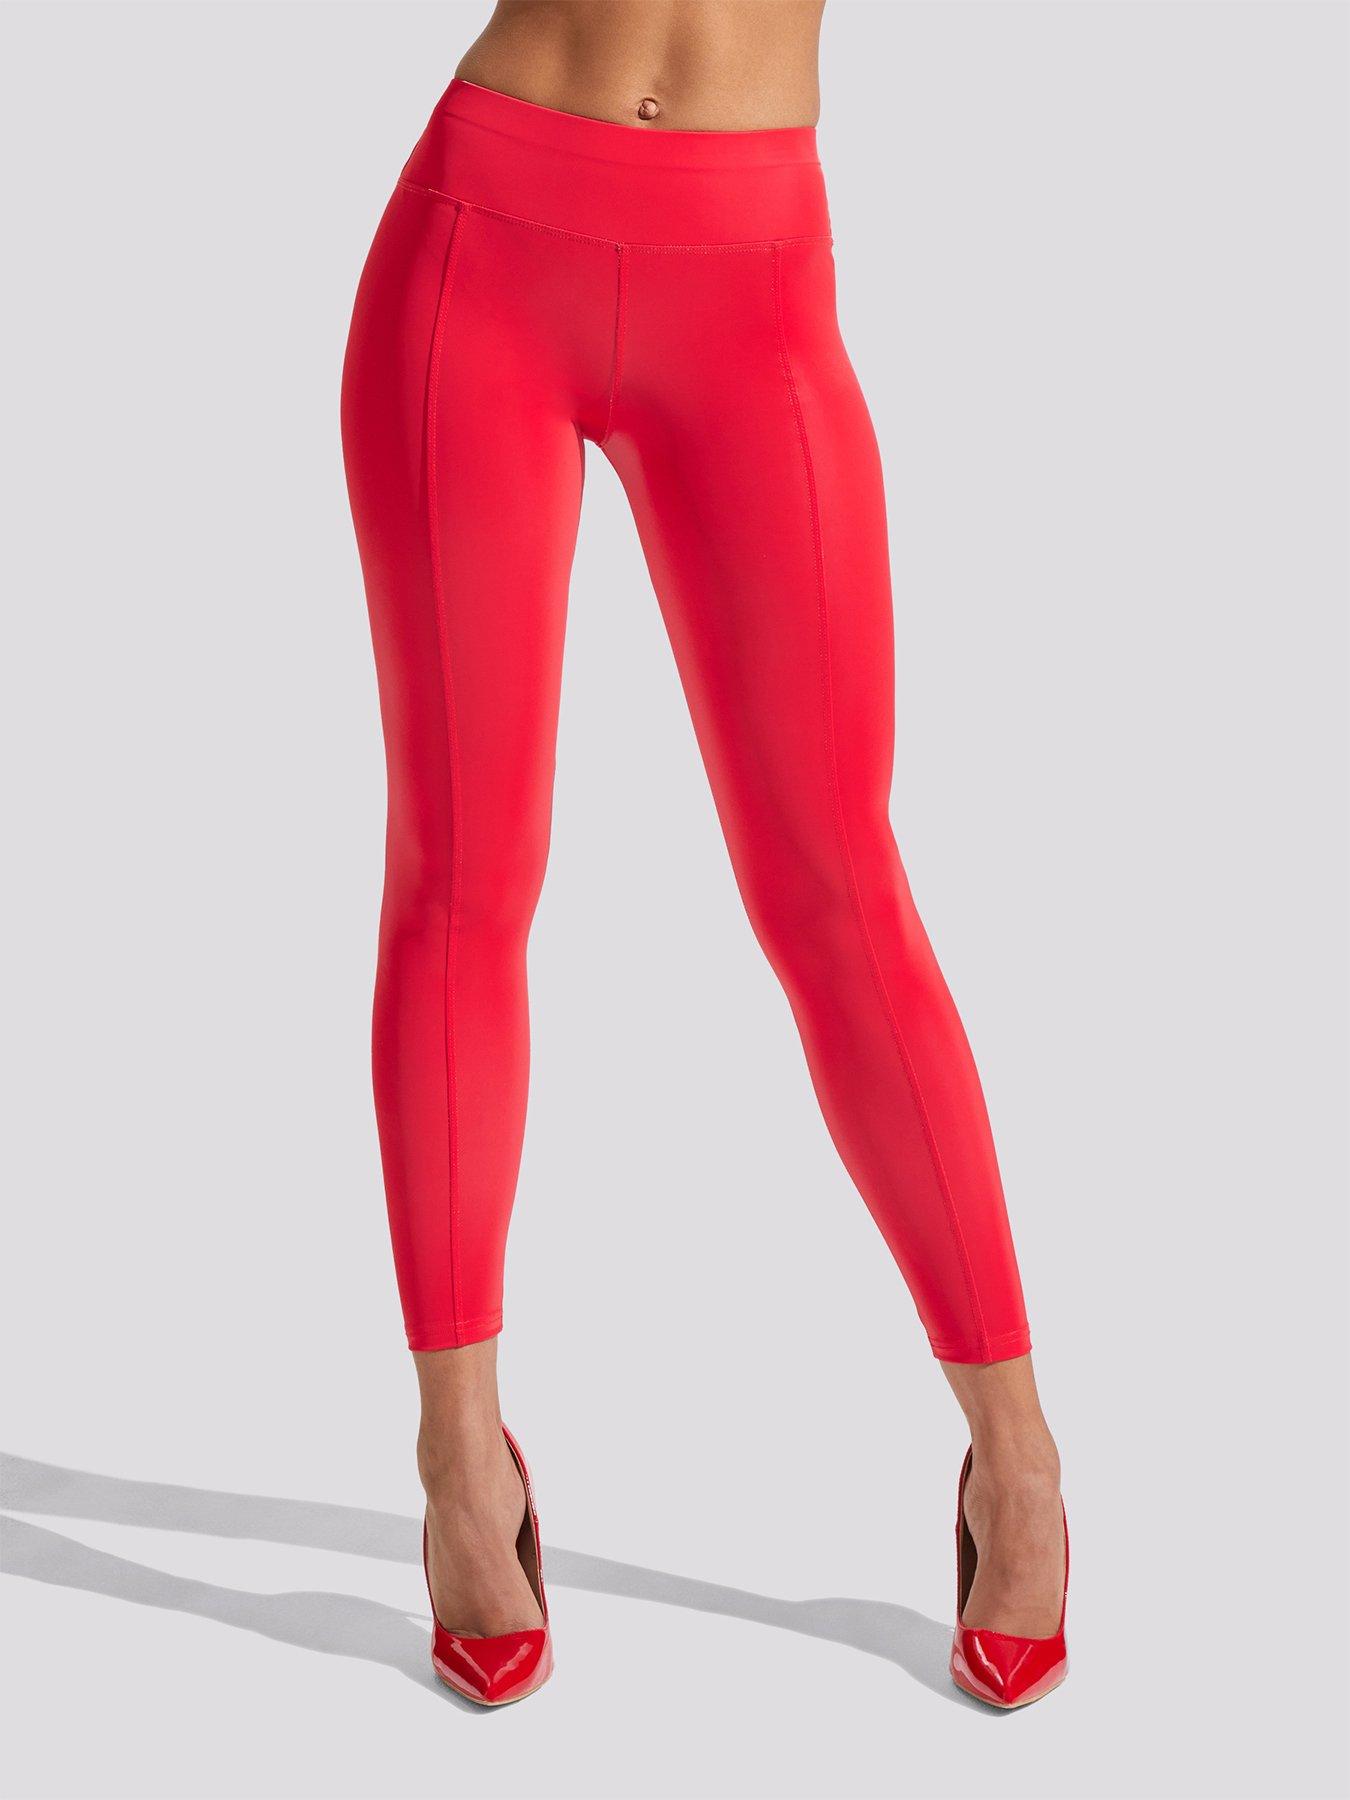 Red hot spanx leggings/1000 - Gem